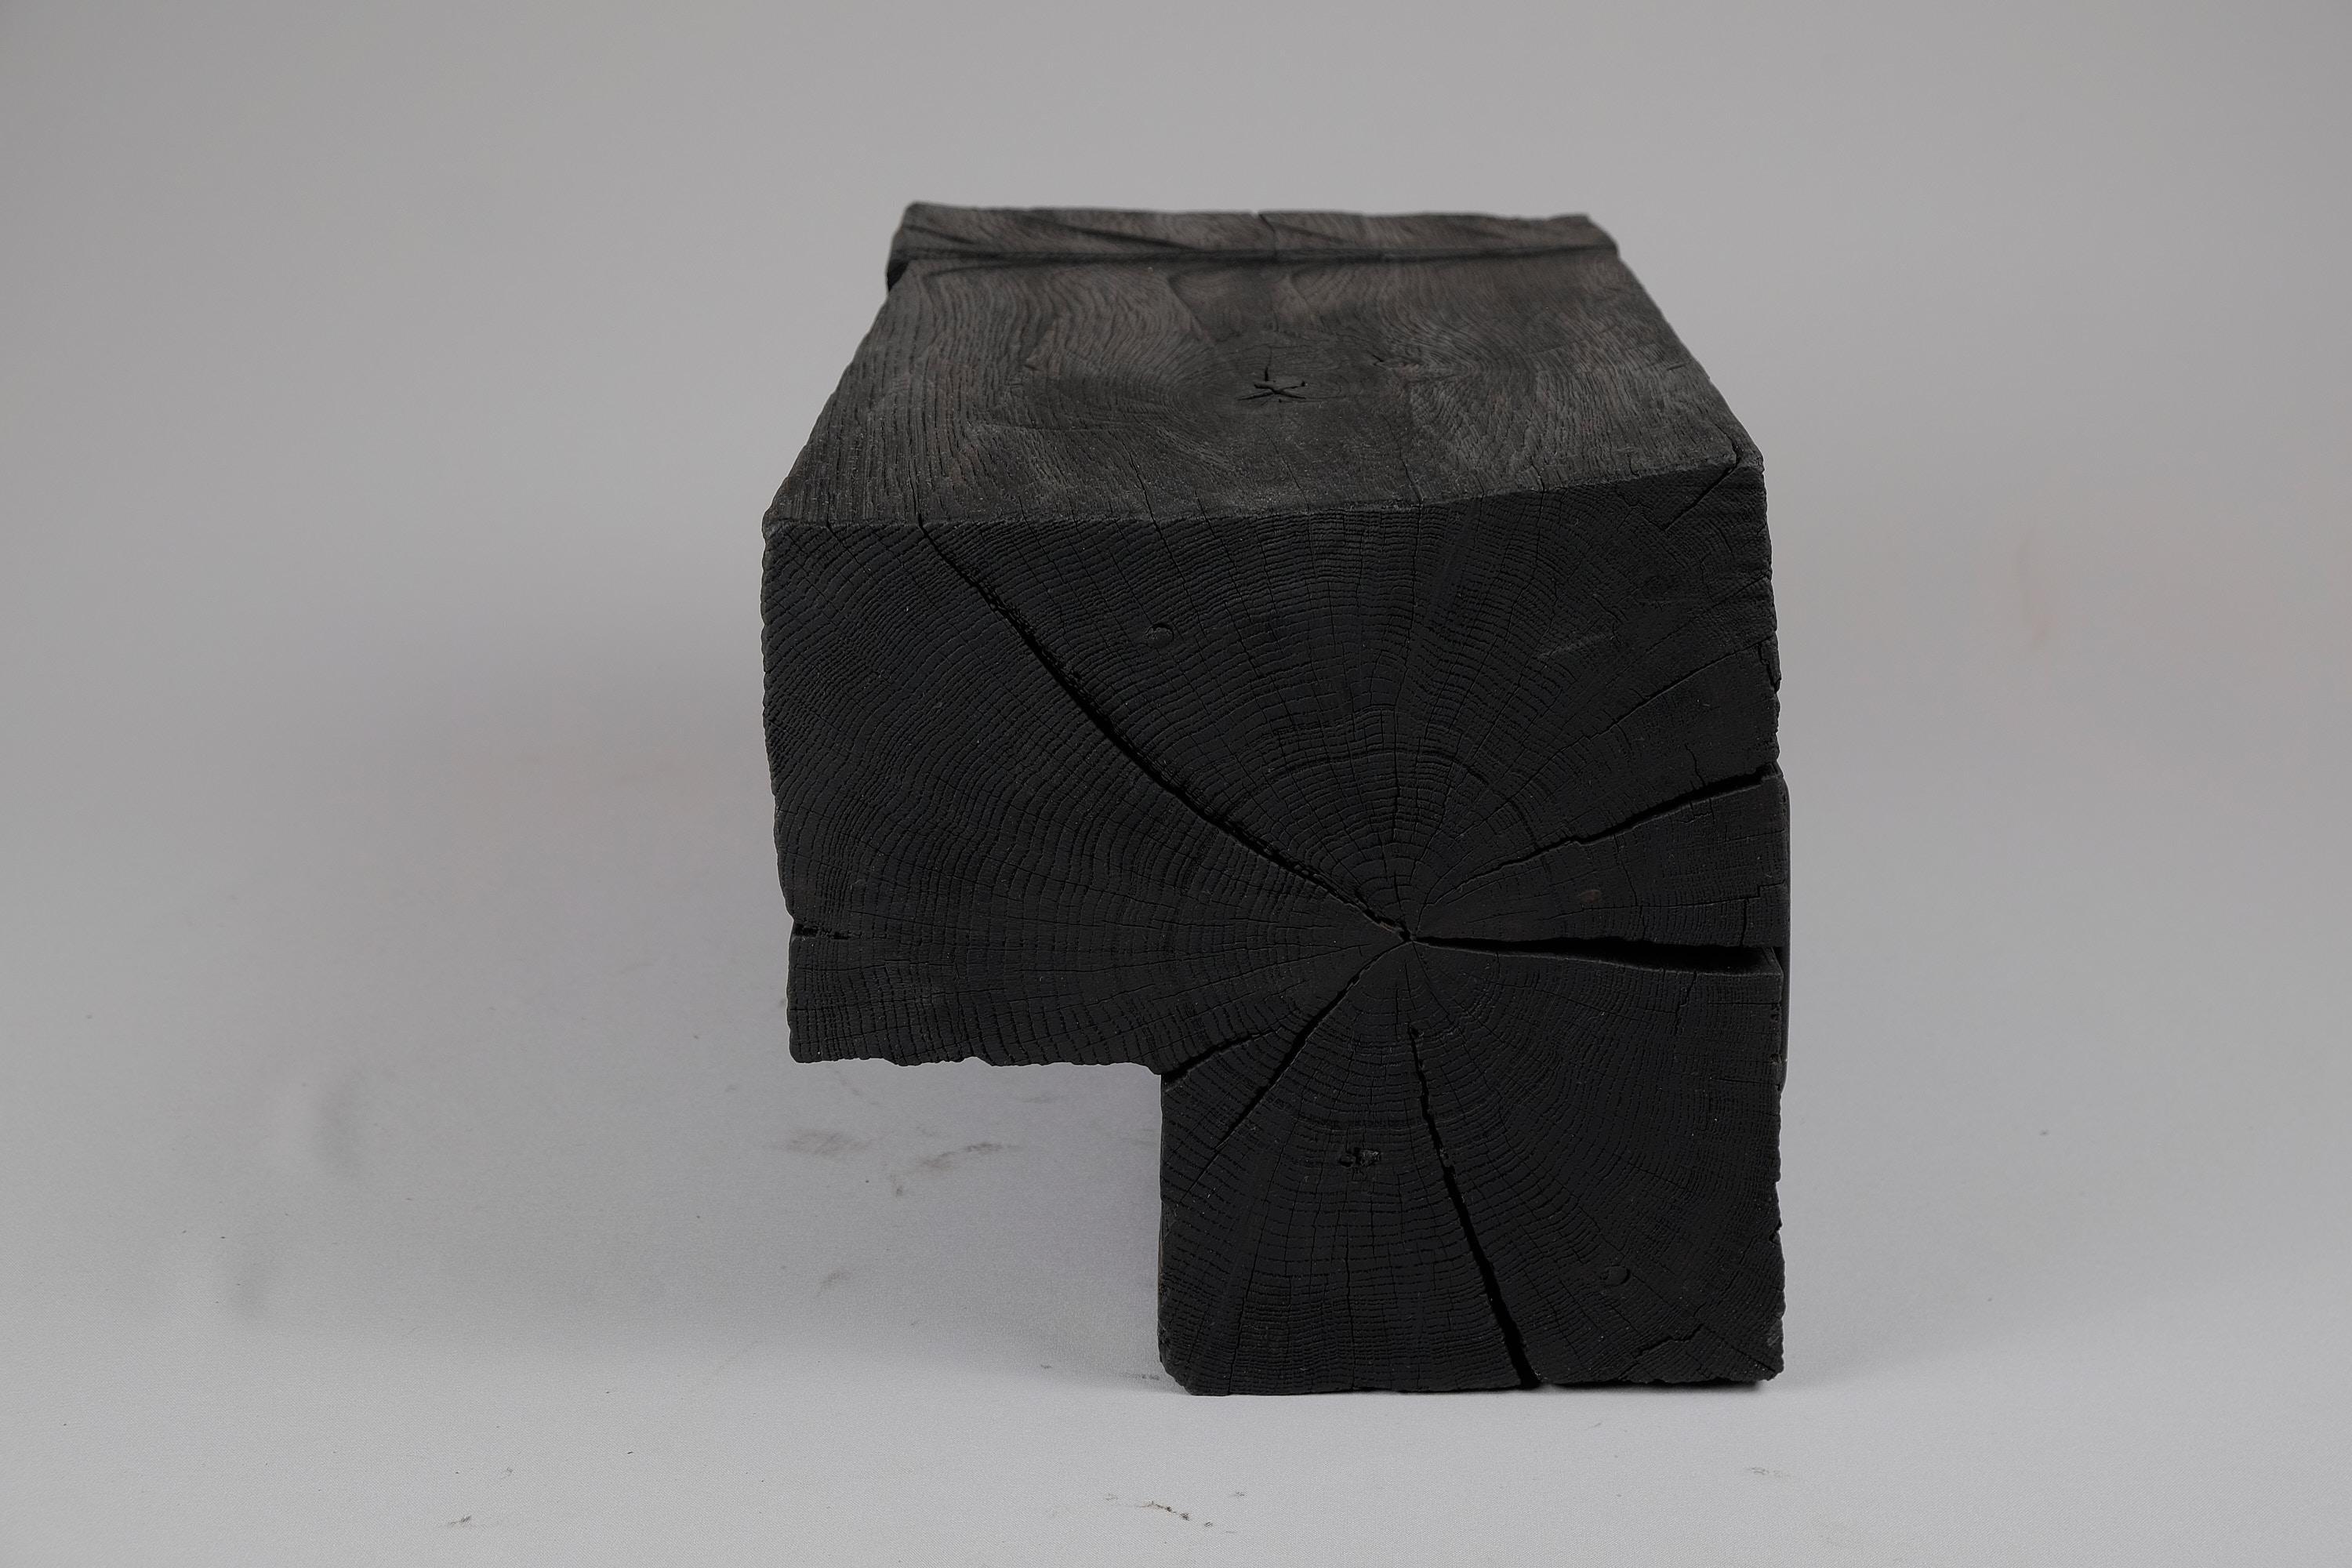 Solid Burnt Wood, Sculptural Side Table, Original Contemporary Design, Logniture 1